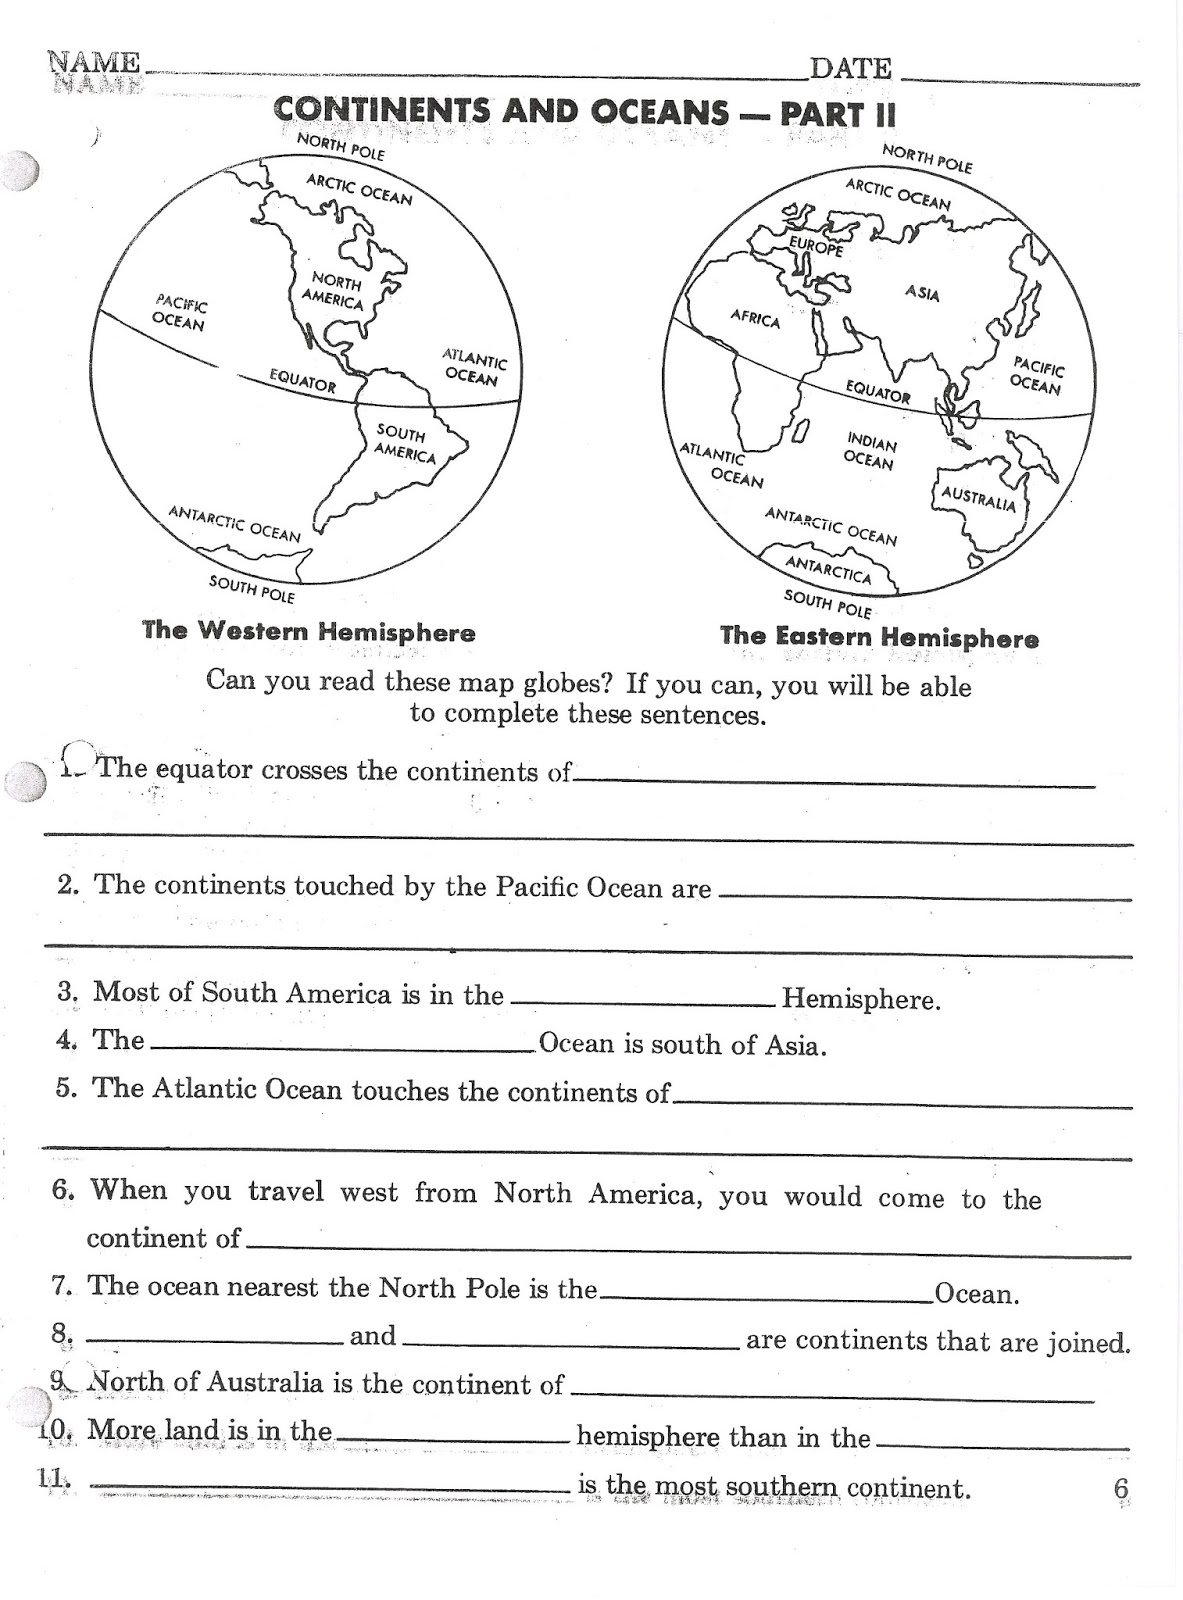 30-free-printable-4th-grade-social-studies-worksheets-photos-images